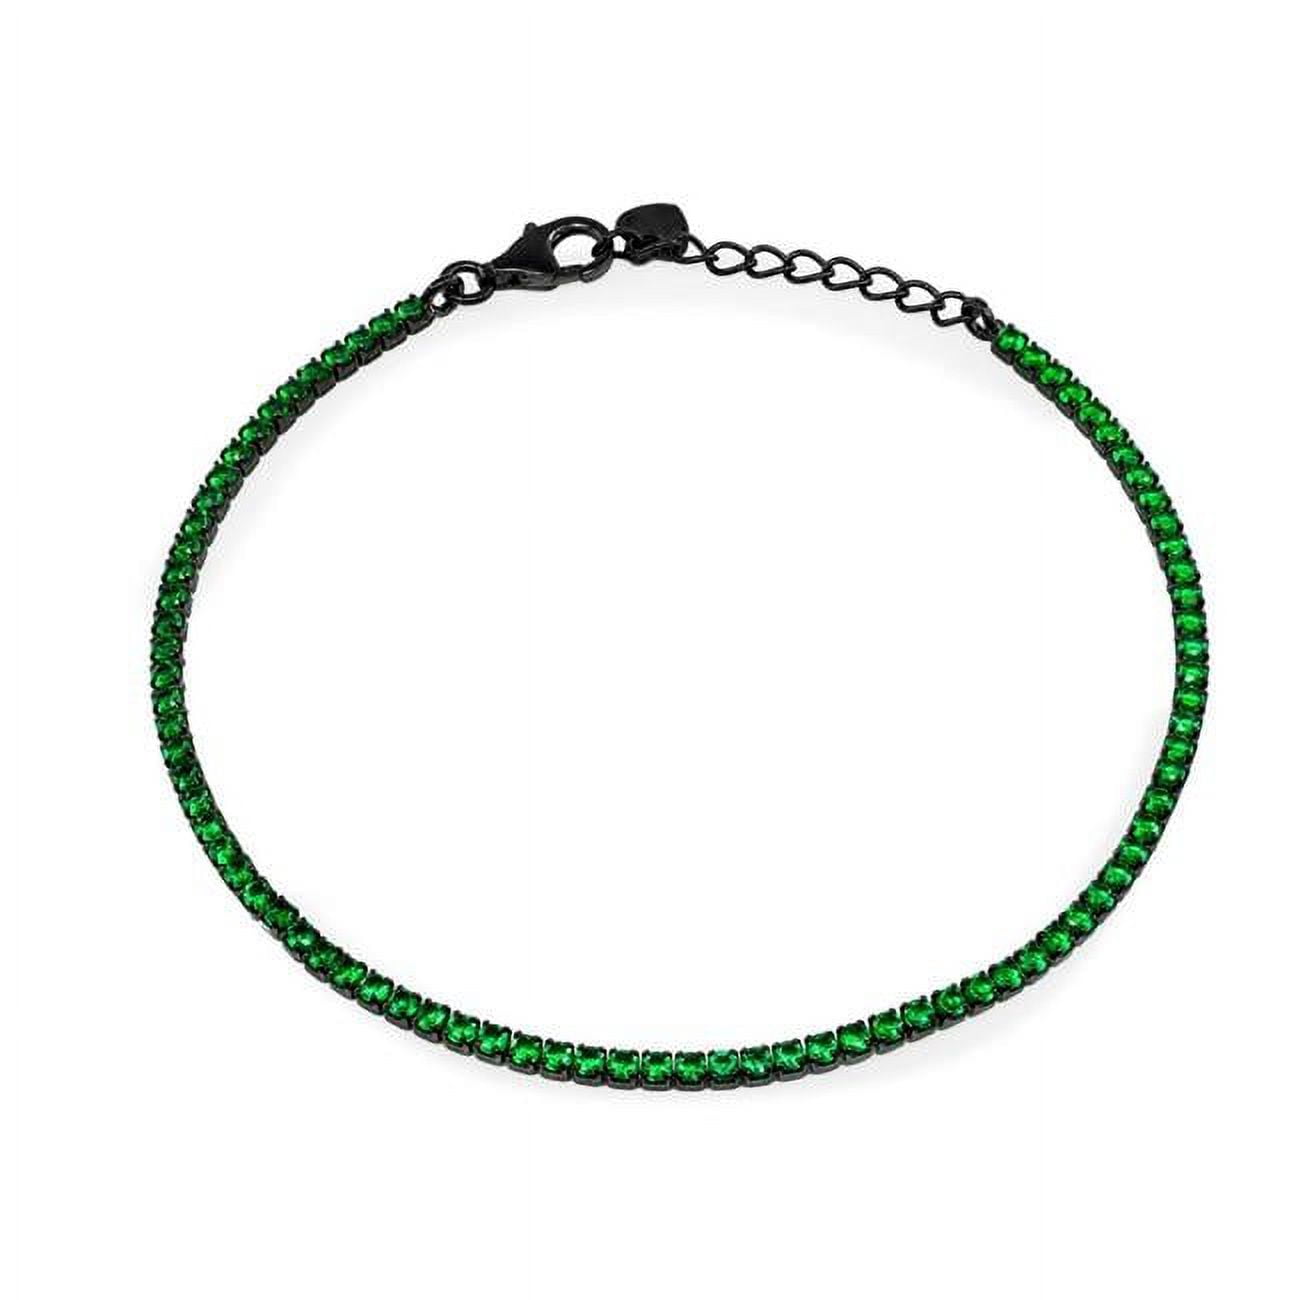 1b2121e 6.5 In. Sterling Silver Mini Ambition Green Cz Tennis Bracelet - Midnight Black